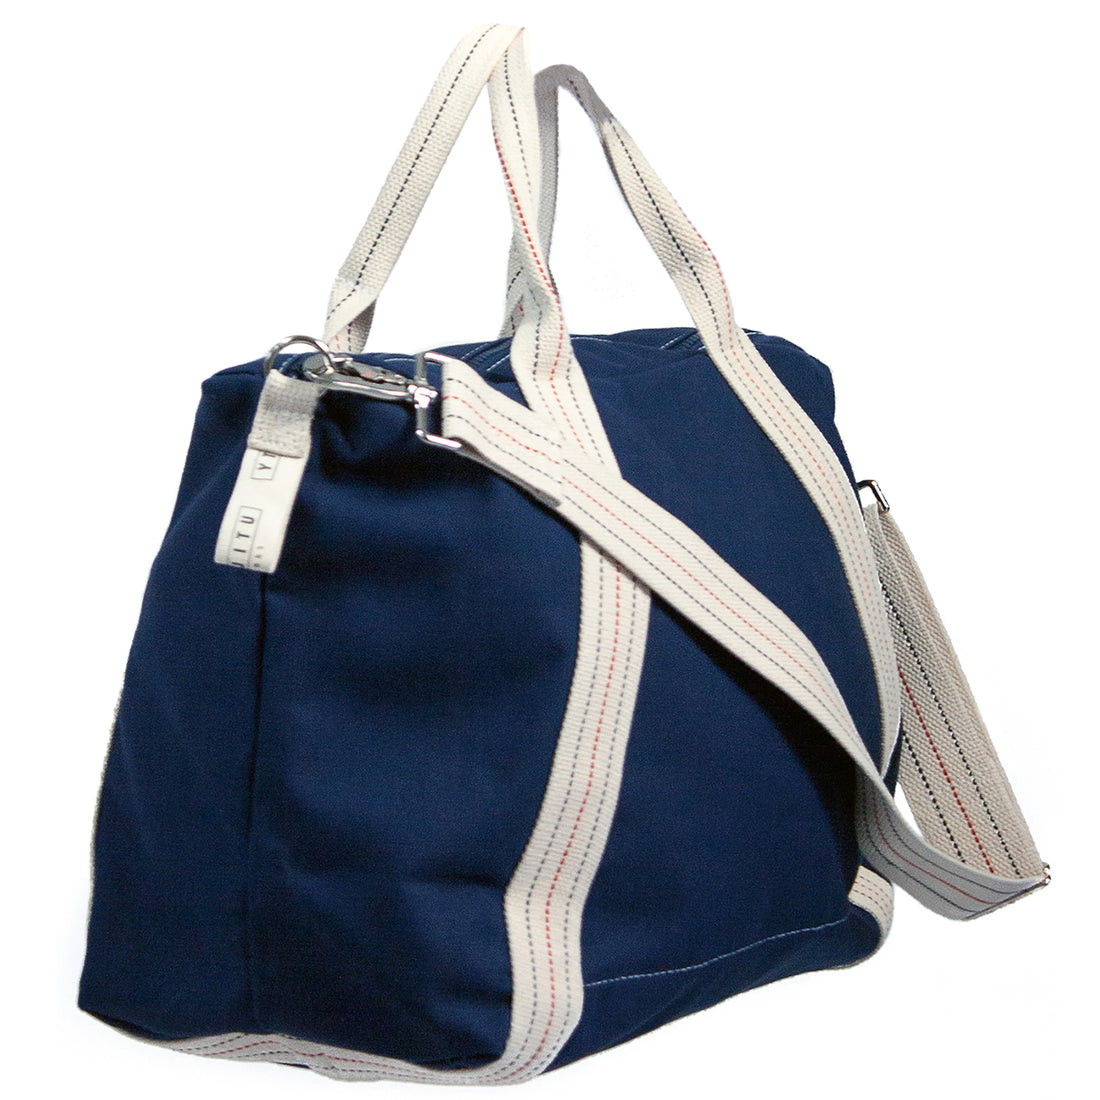 Tan & Fuchsia Bag Strap